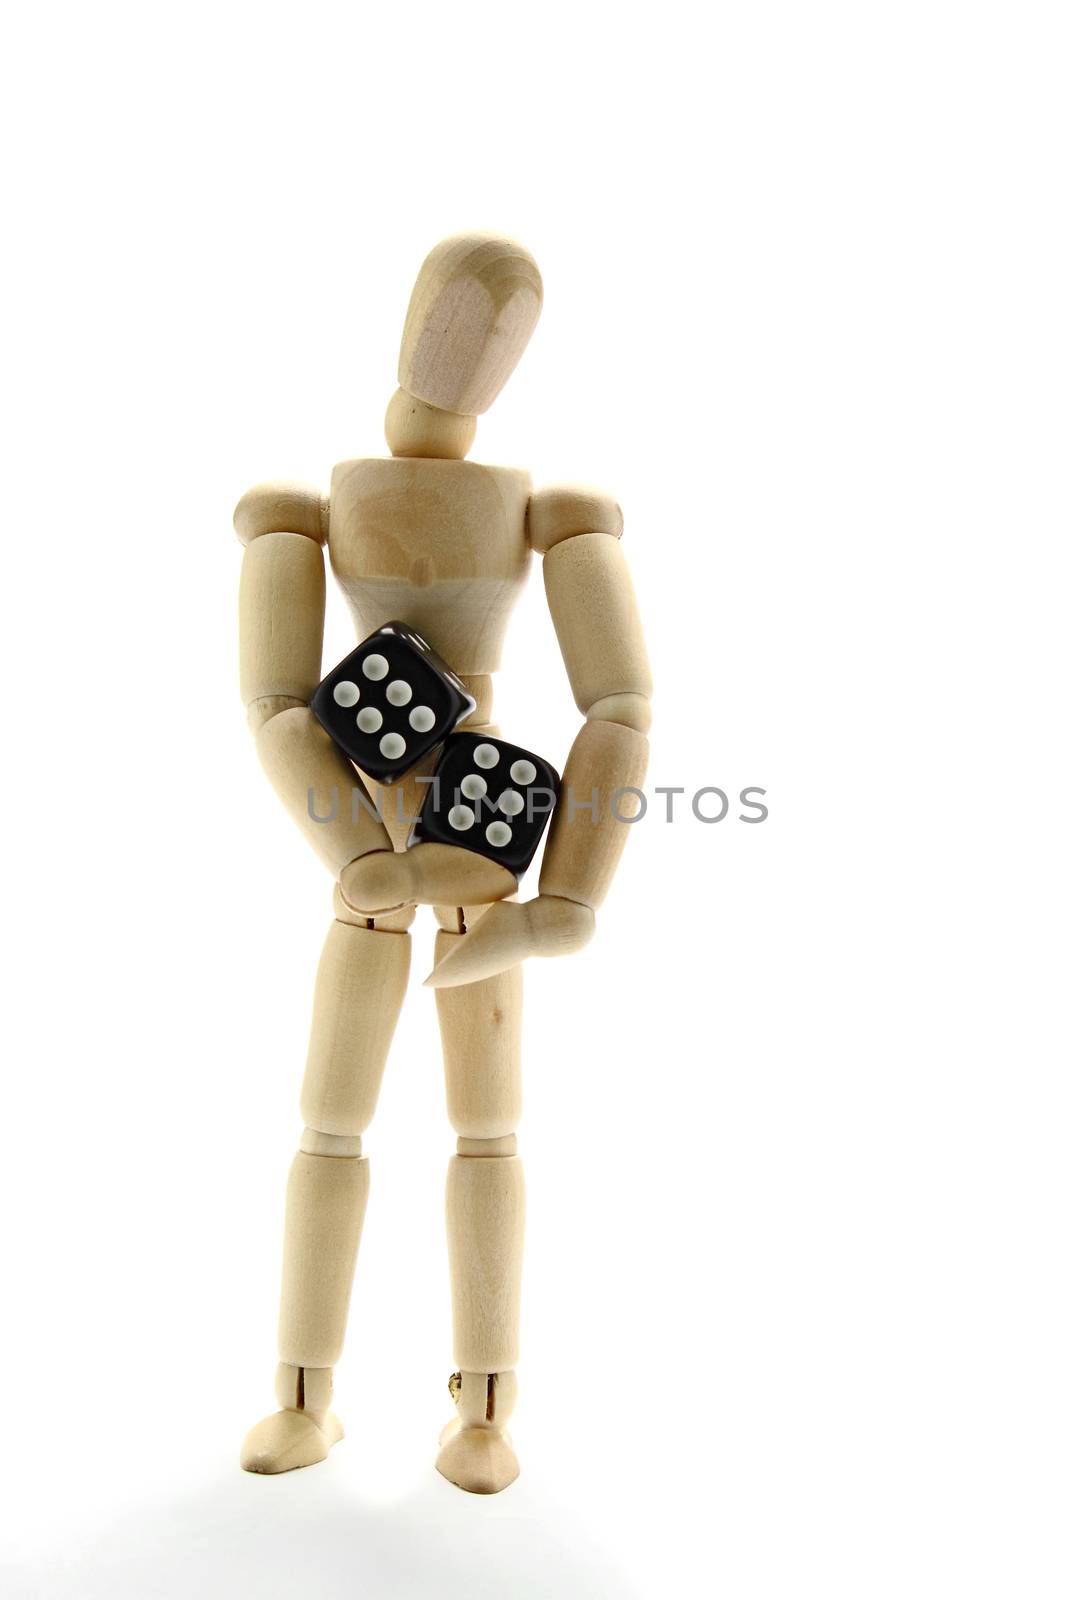 Wooden manikin holding dice on white background